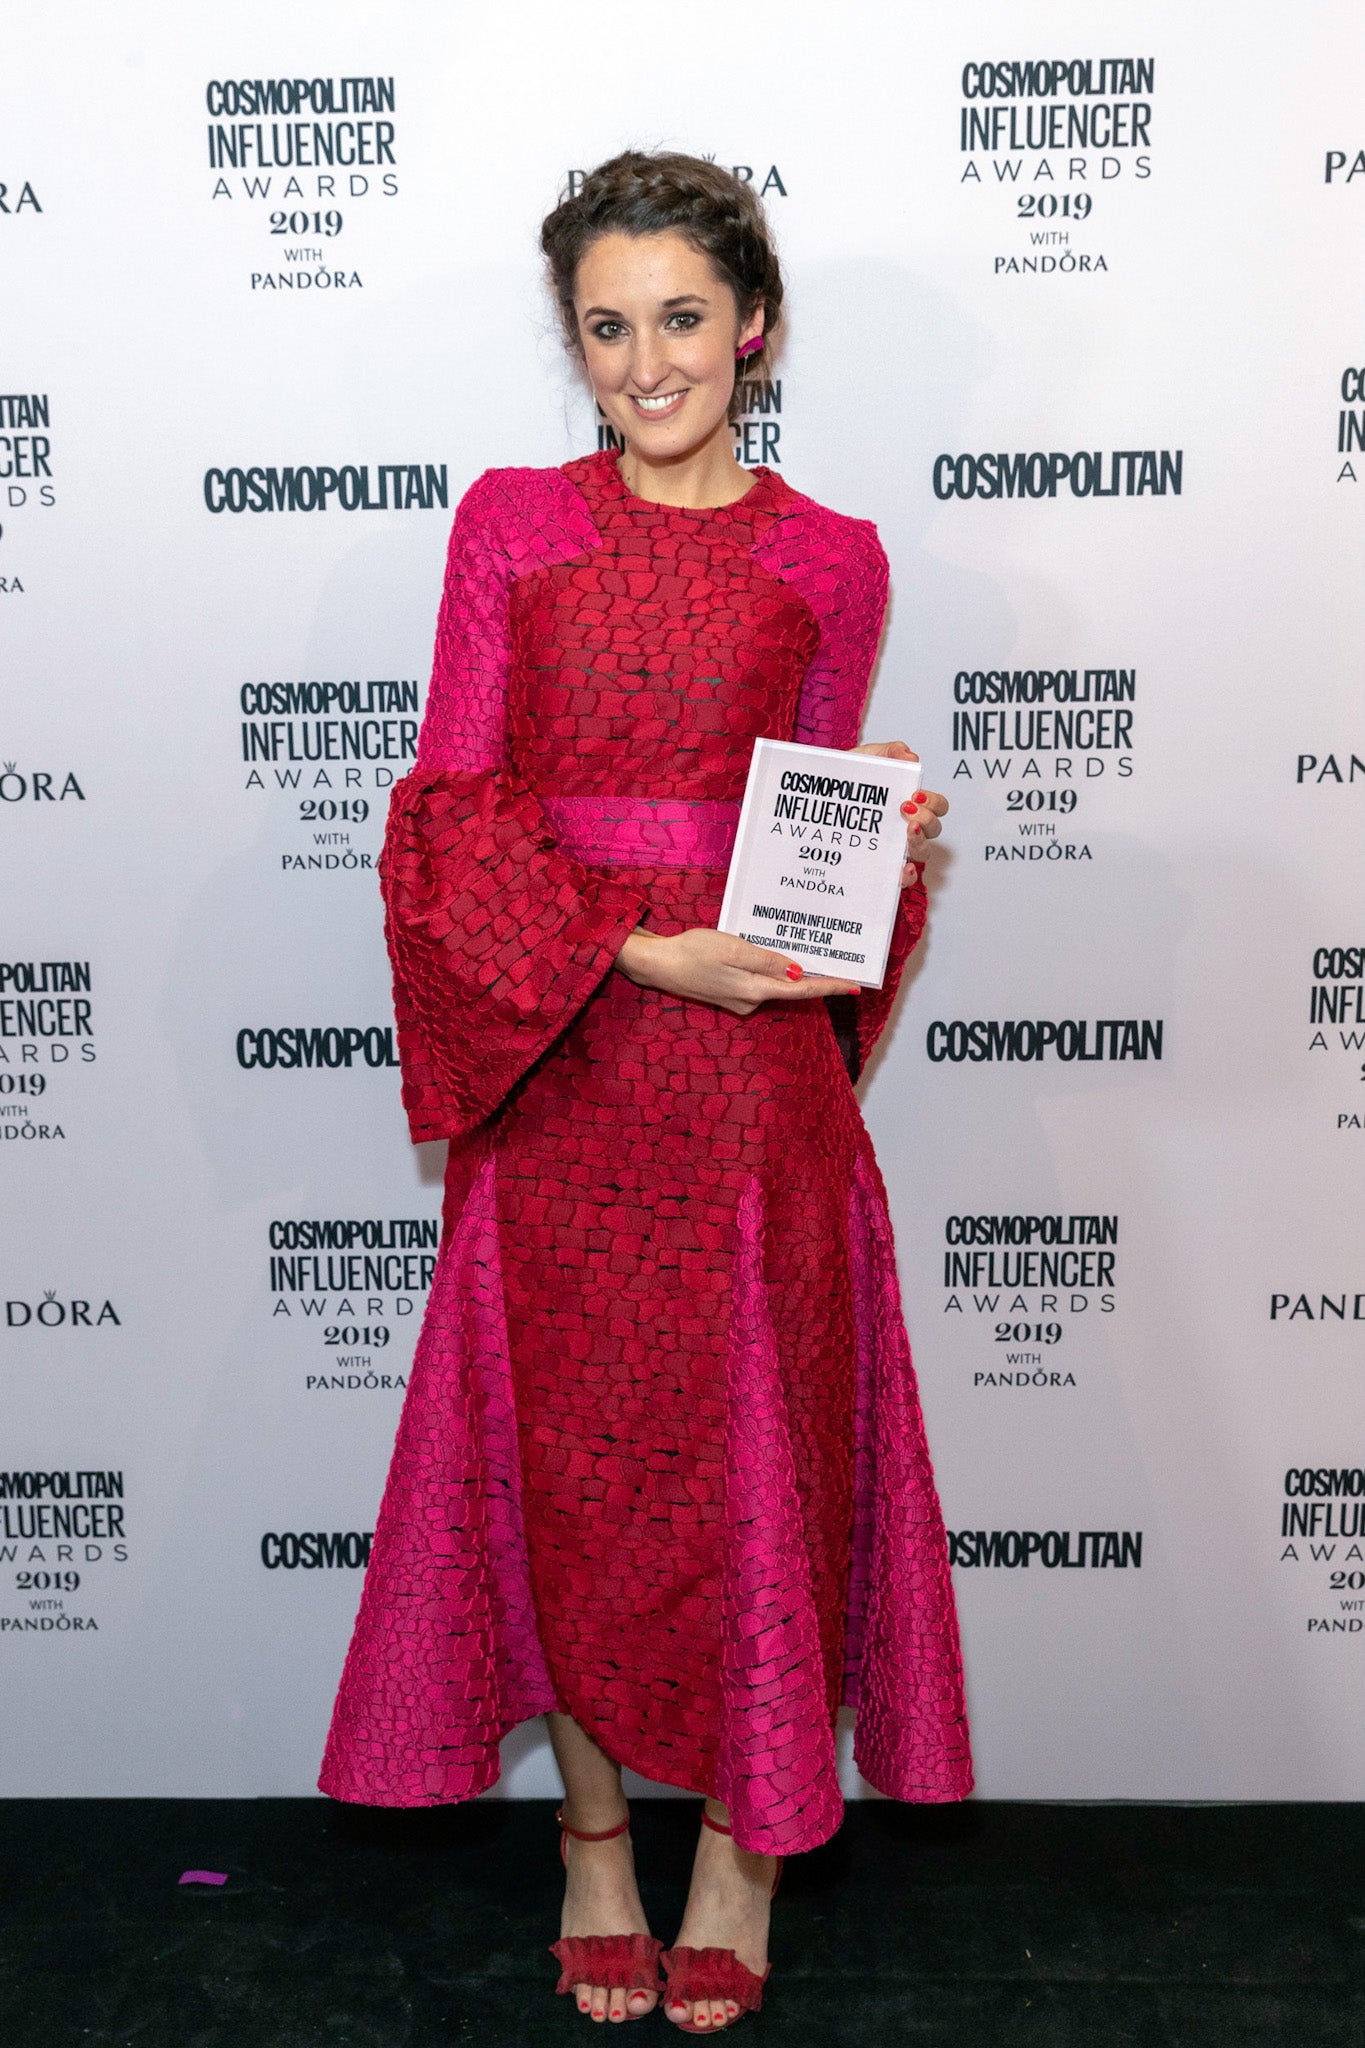 Rosanna Falconer wins innovation influencer of the year at Cosmopolitan Awards